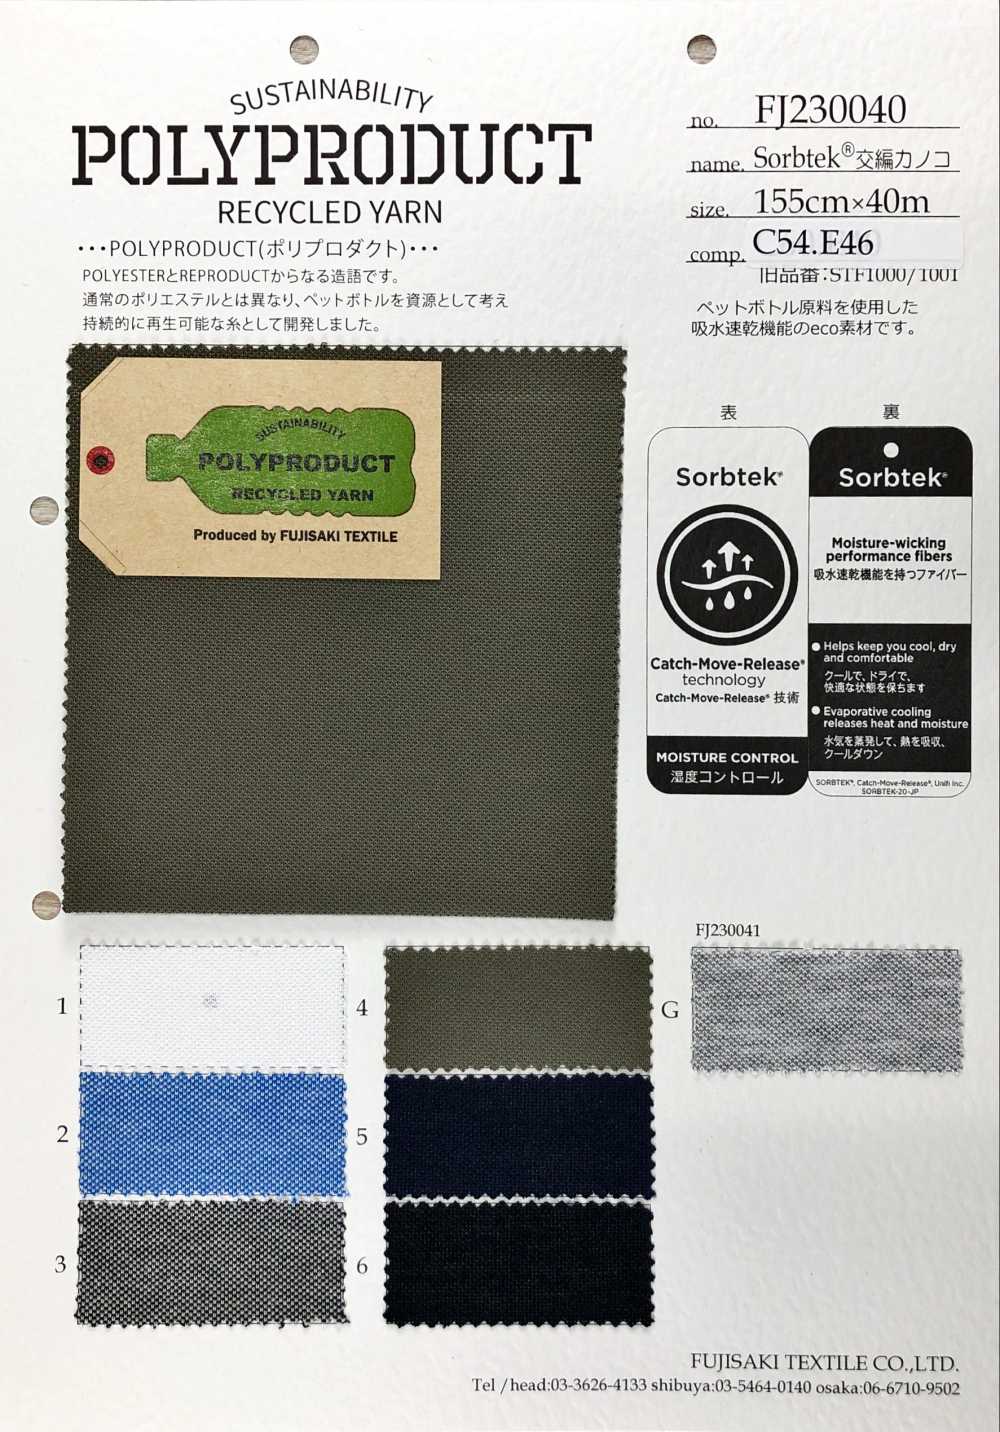 FJ230040 Sorbtek đan Mũi đan Hạt Gạo[Vải] Fujisaki Textile